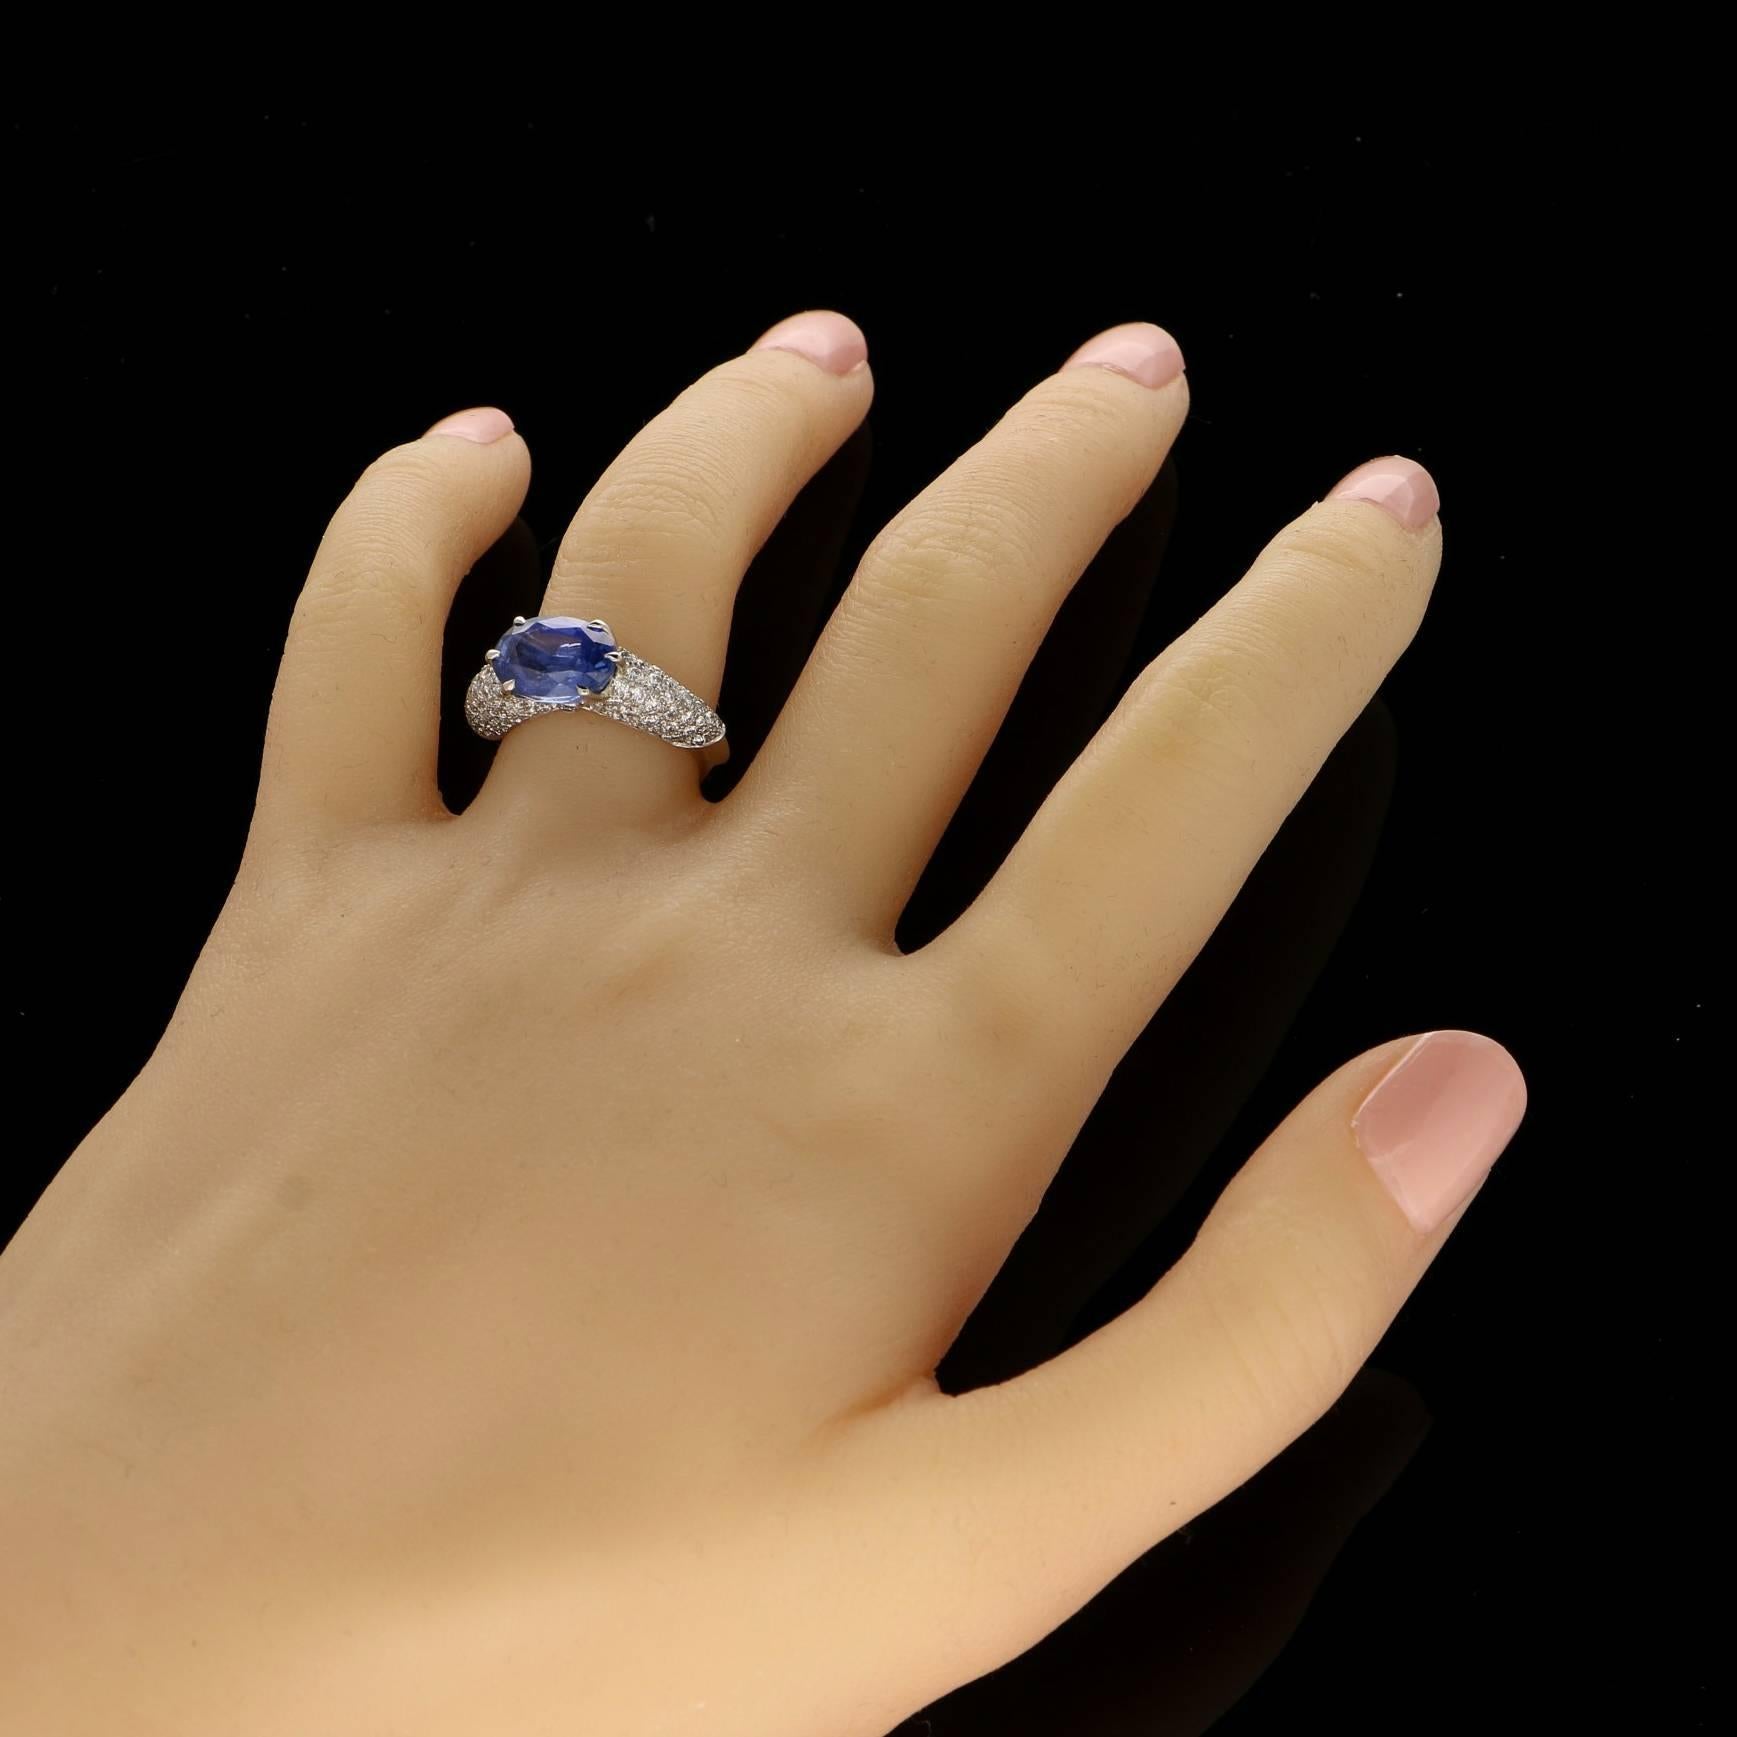 Women's 4.76 Carat Sapphire Ring with Pavé Diamond-Set Raised Mount in Platinum